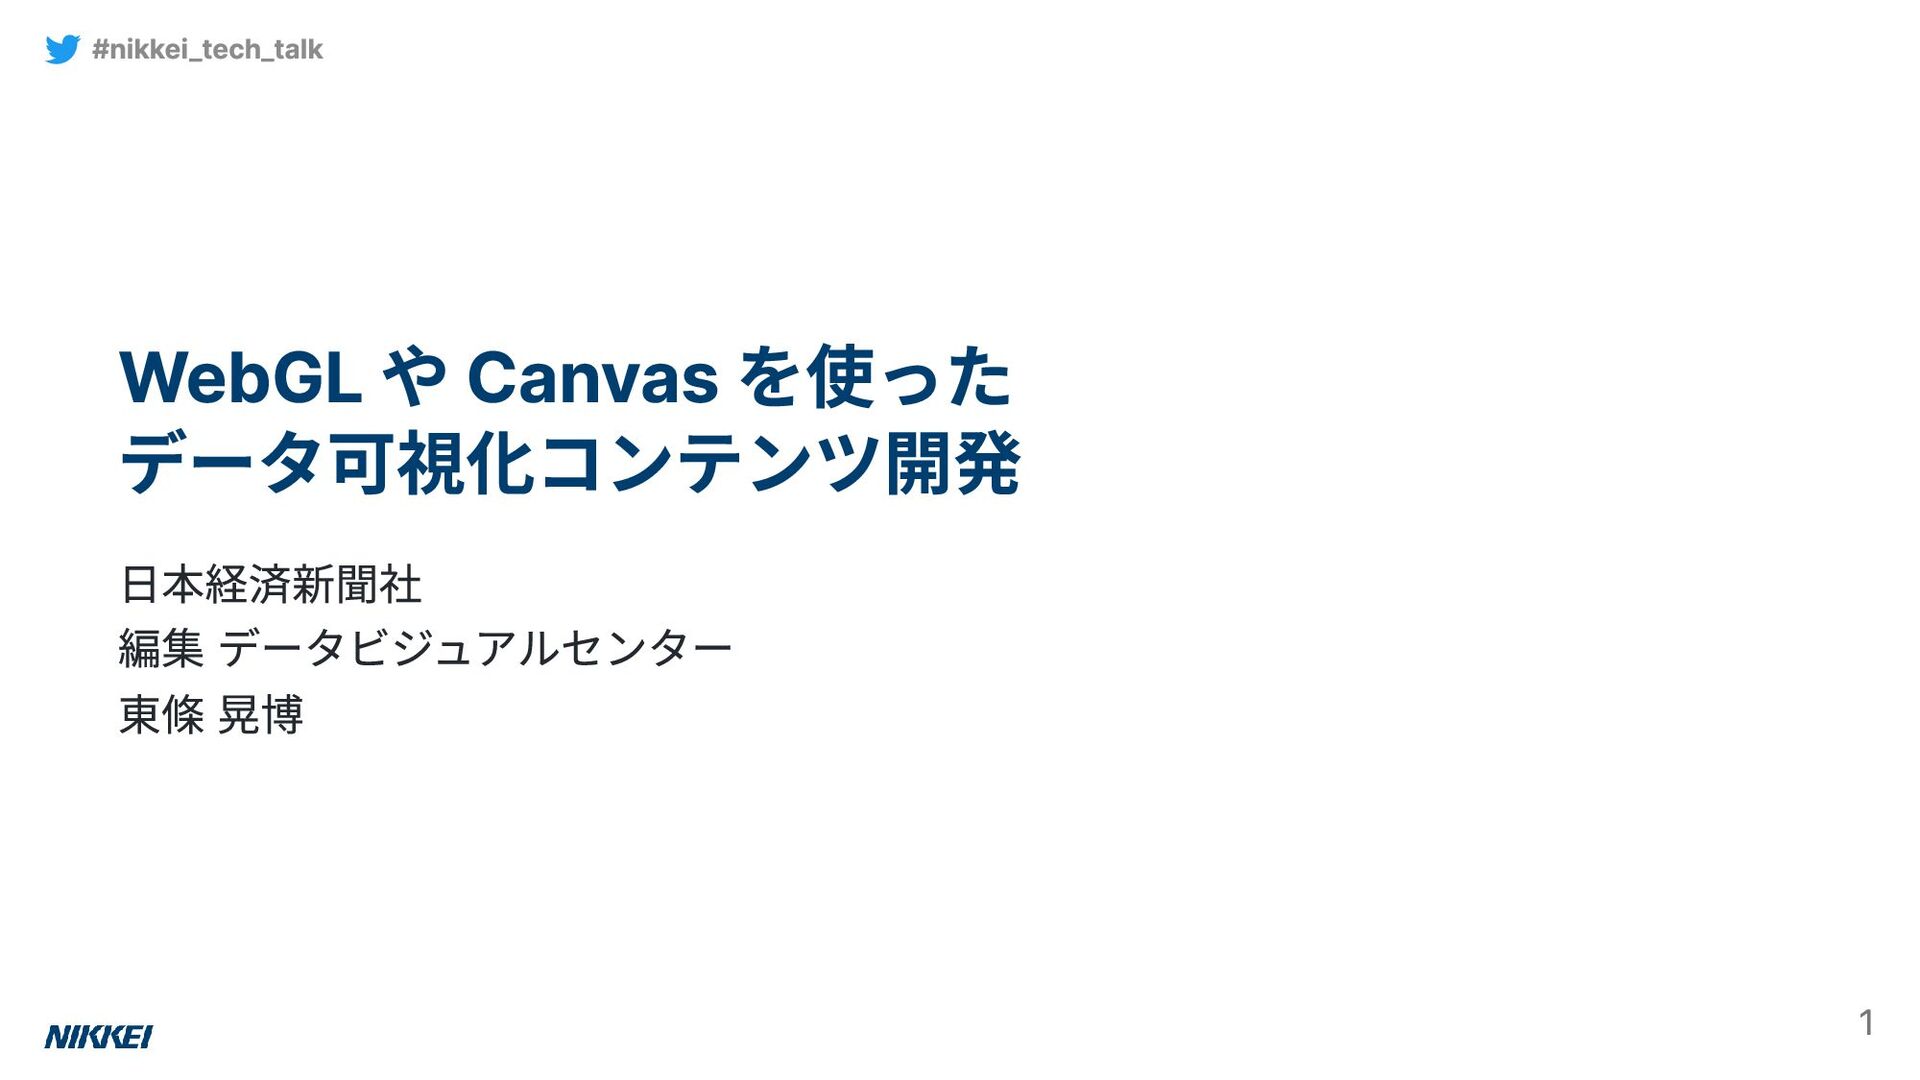 WebGLやCanvasを使ったデータ可視化コンテンツ開発/nikkei-tech-talk5-3